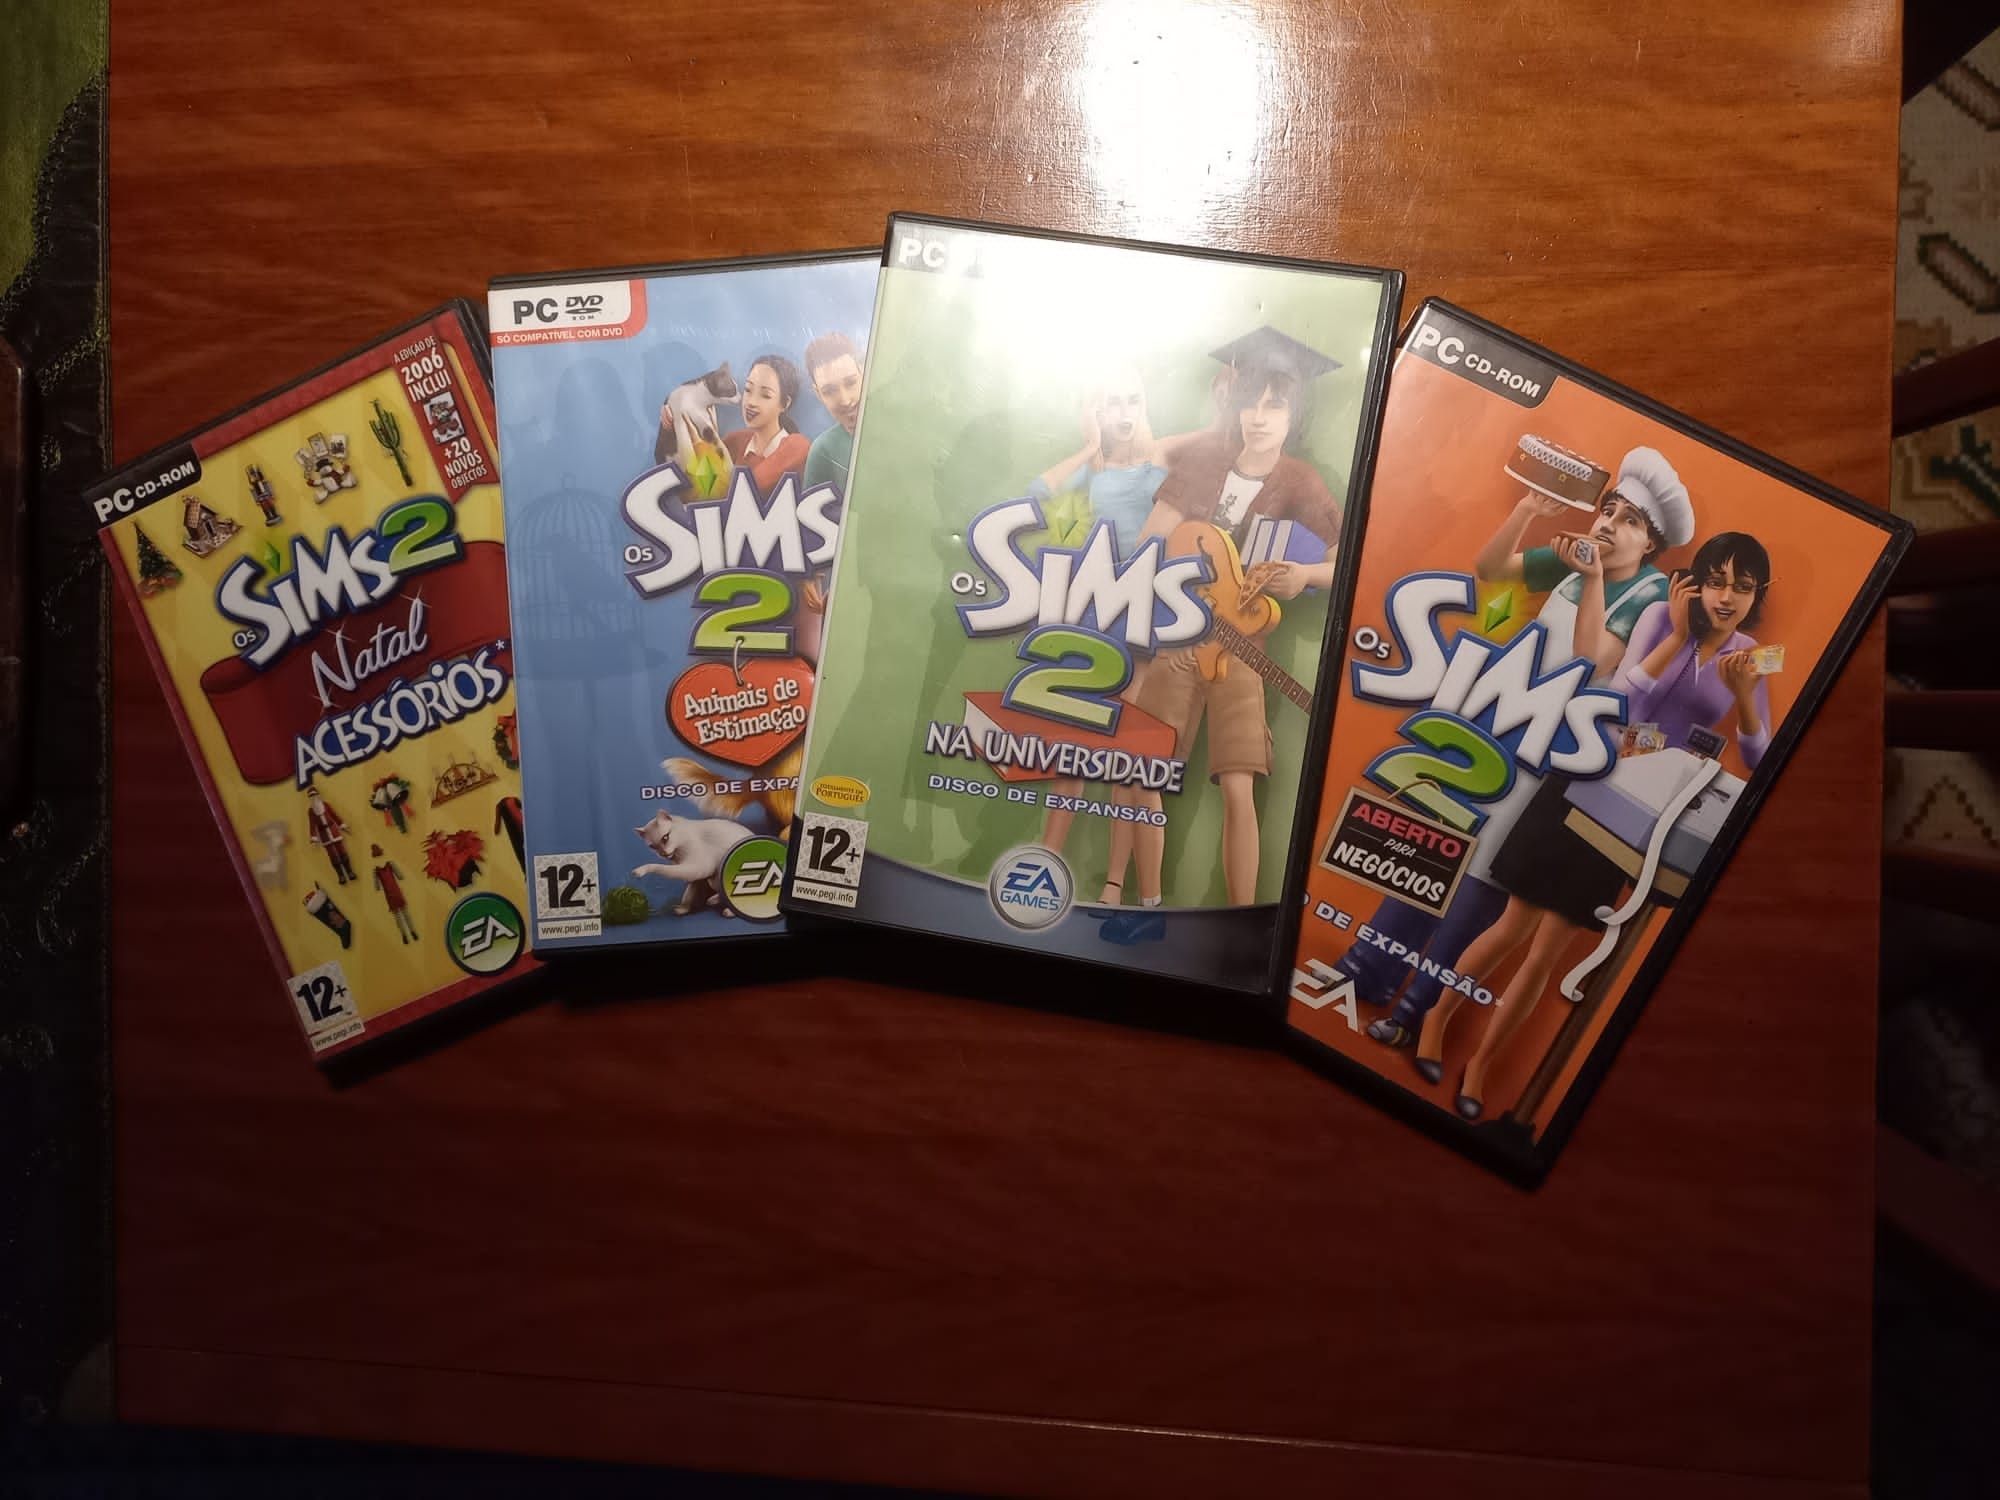 The Sims 2 + 4 Expansões